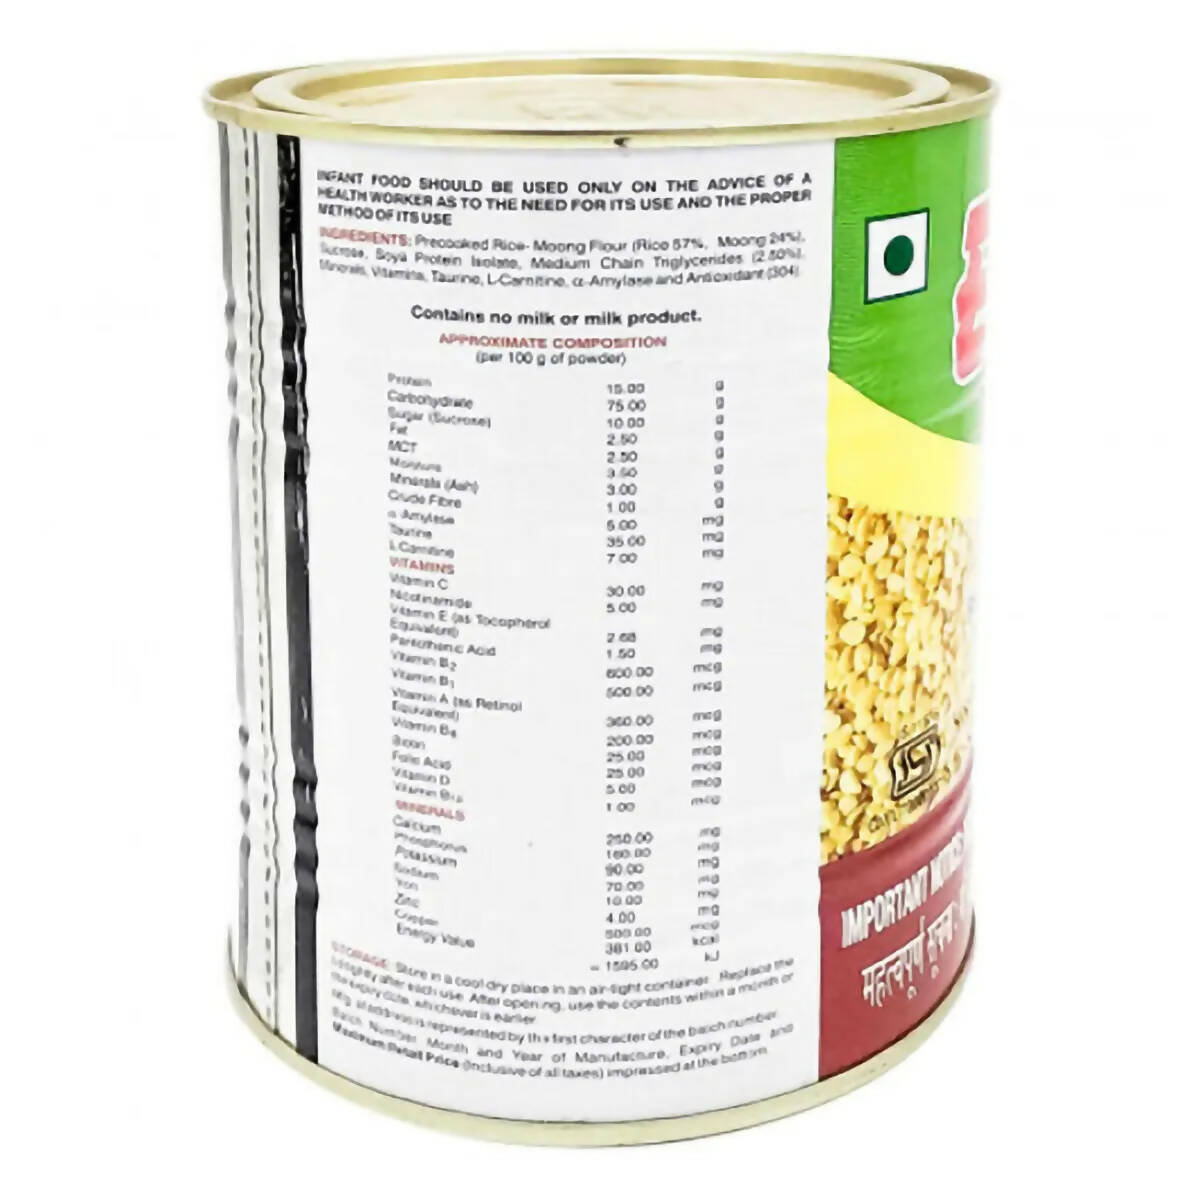 Easifud Plus Rice & Moong Dal Baby Cereal - Distacart